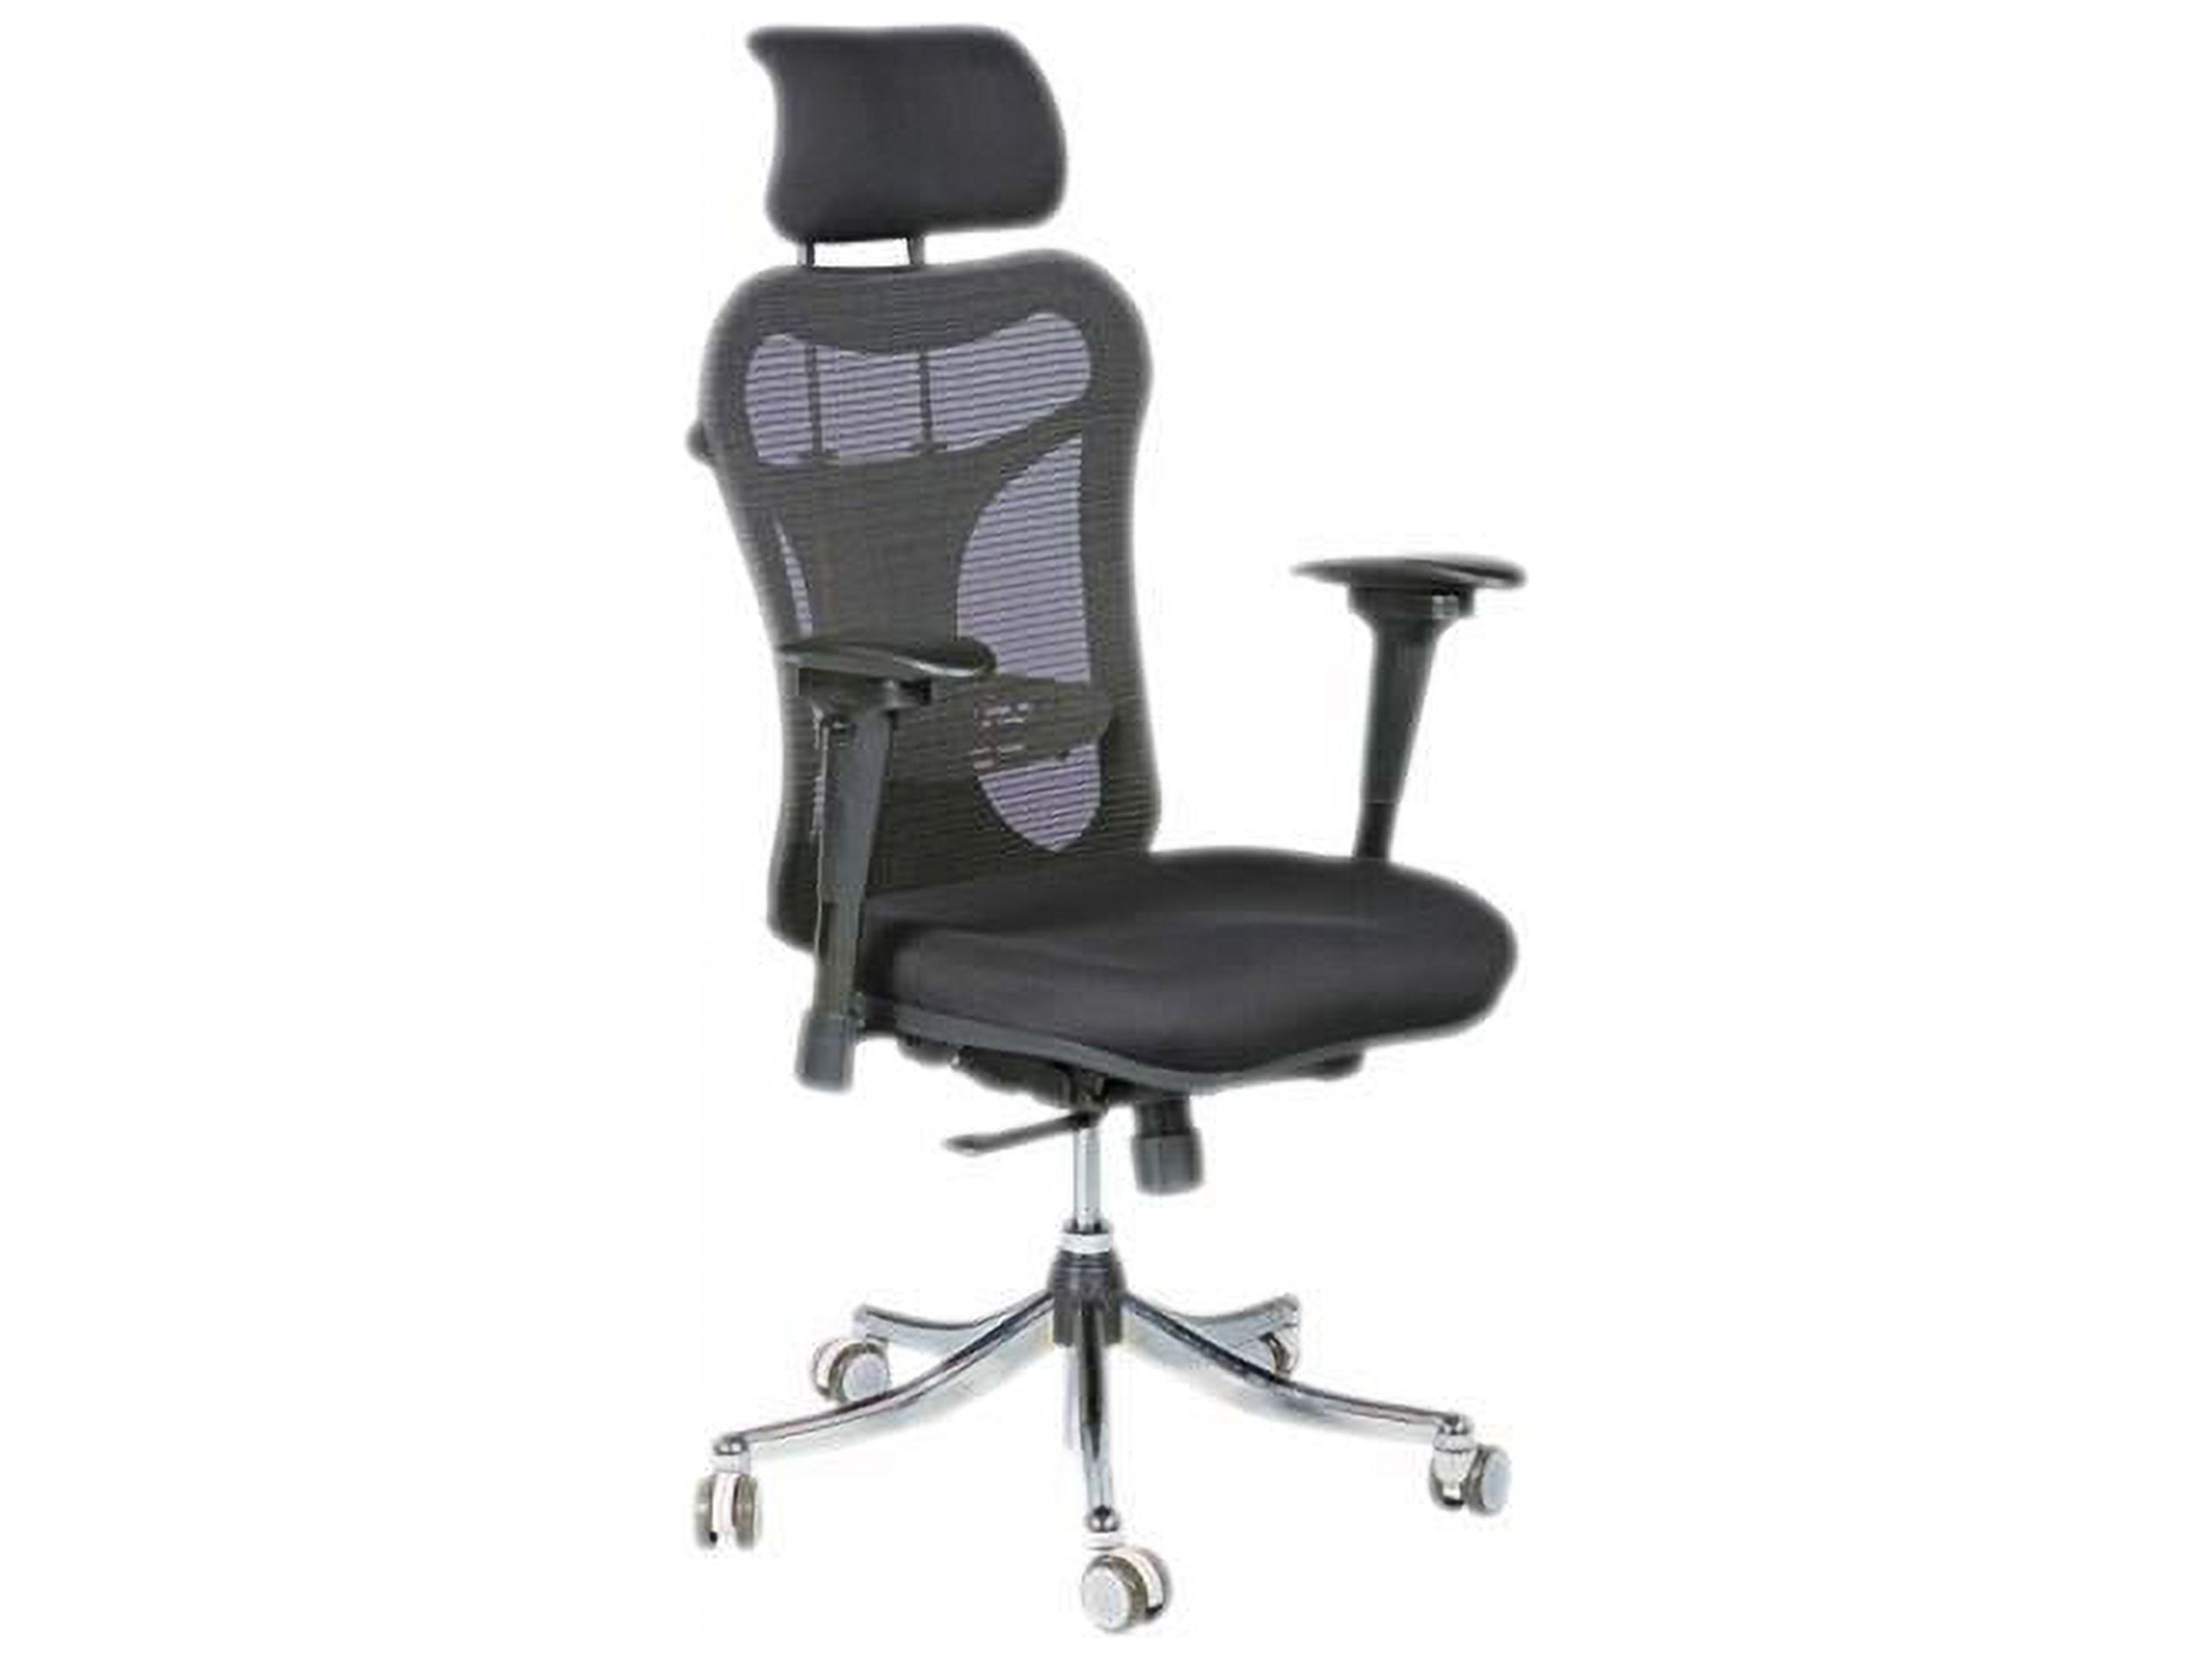 BALT Ergo Ex Executive Office Chair, Mesh Back/Upholstered Seat, Black/Chrome - image 1 of 5